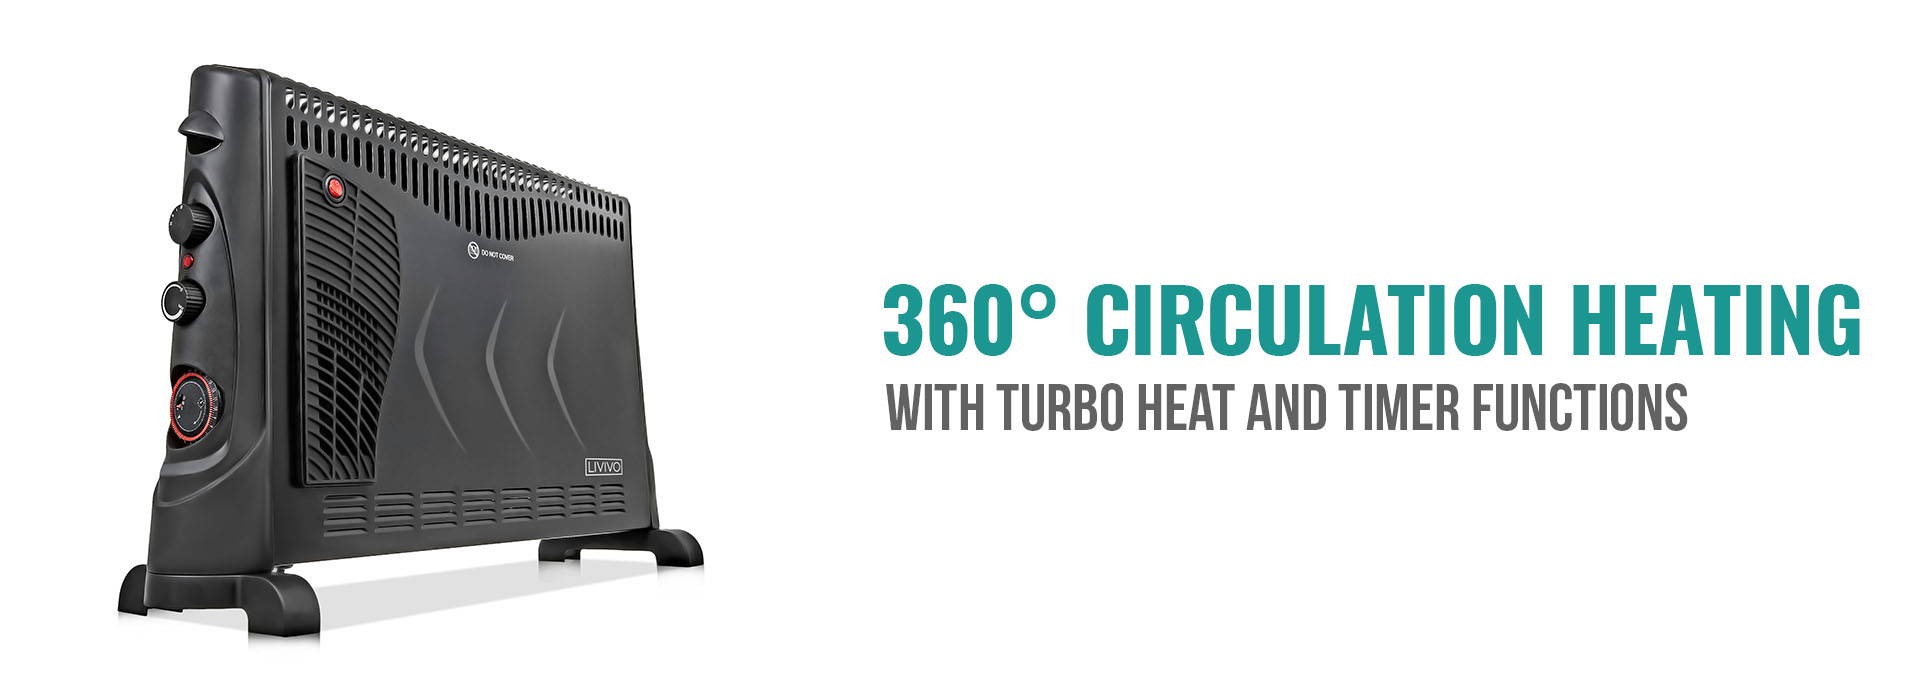 360 Circulation Heating